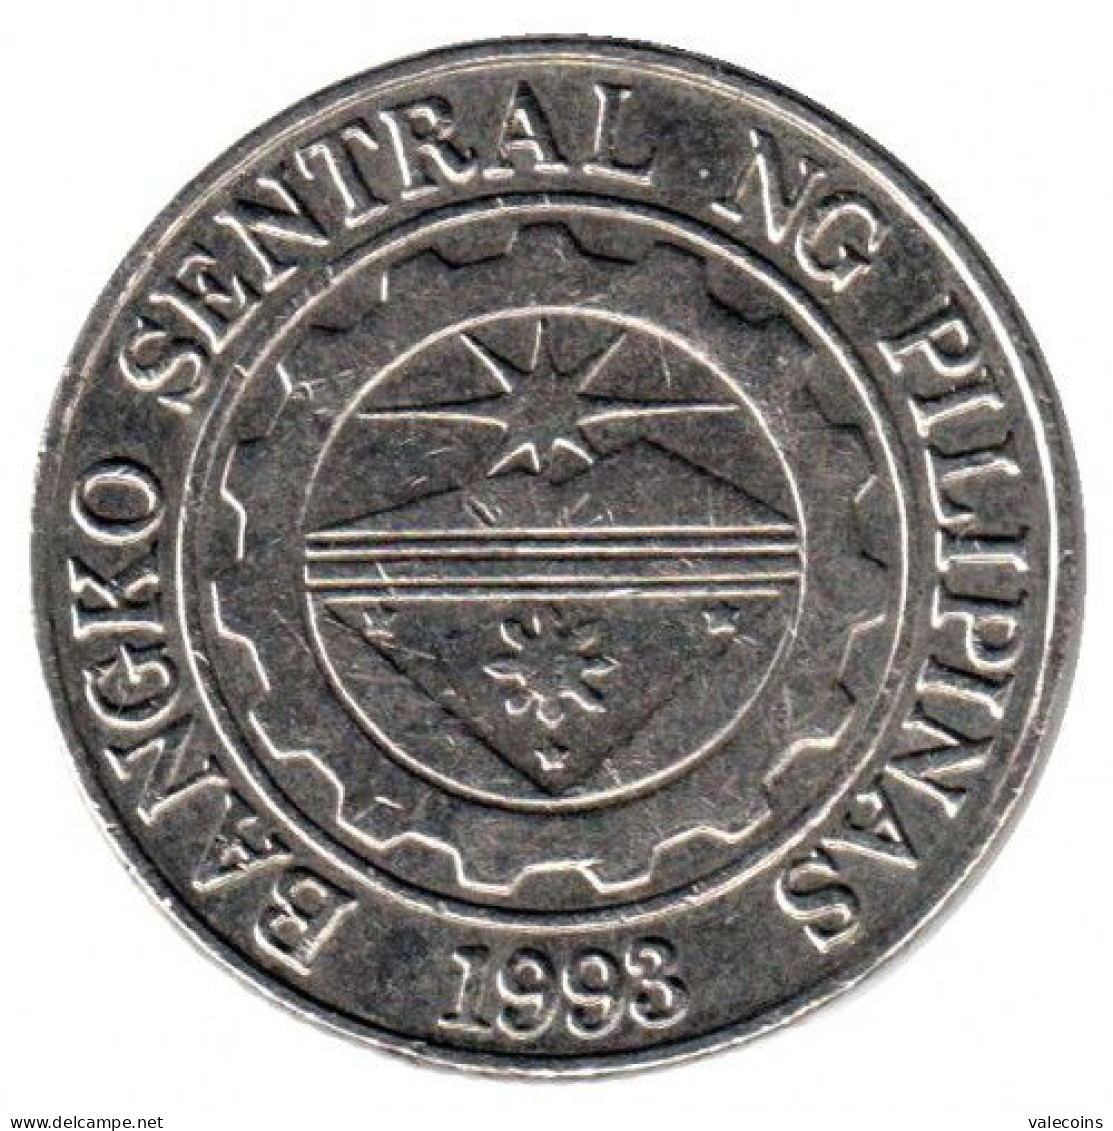 FILIPPINE PILIPINAS PHILIPPINES - 1997 - 1 Piso - KM 269 - Coin UNC - Philippines